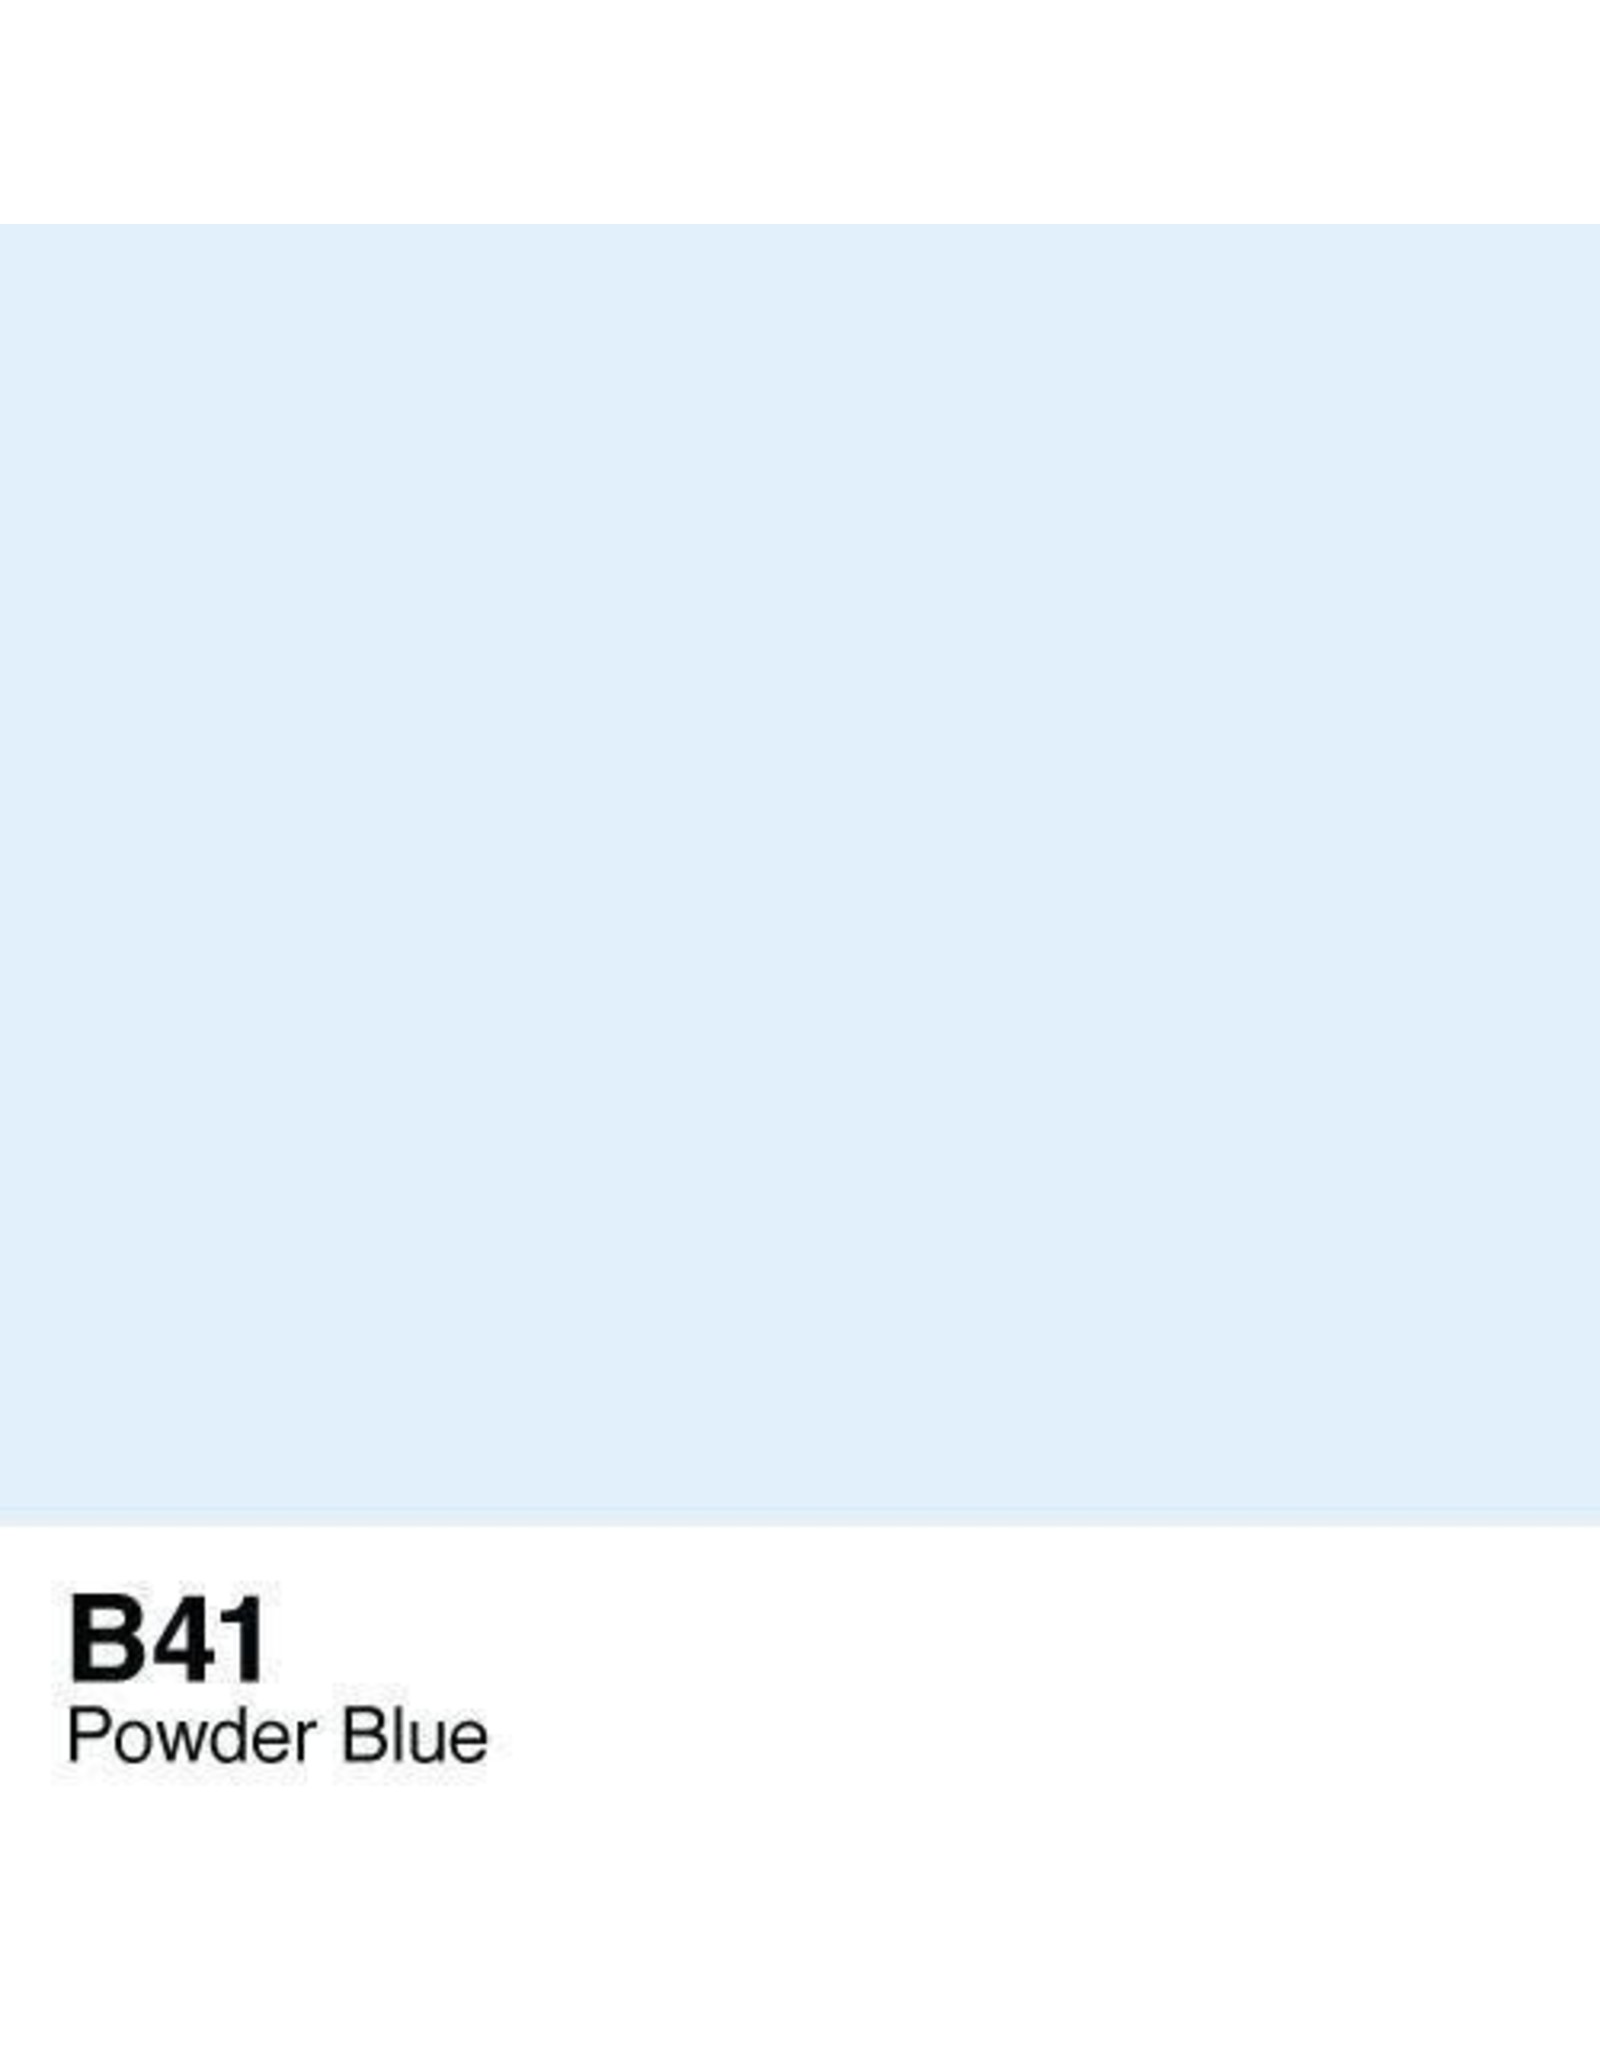 COPIC COPIC B41 POWDER BLUE SKETCH MARKER